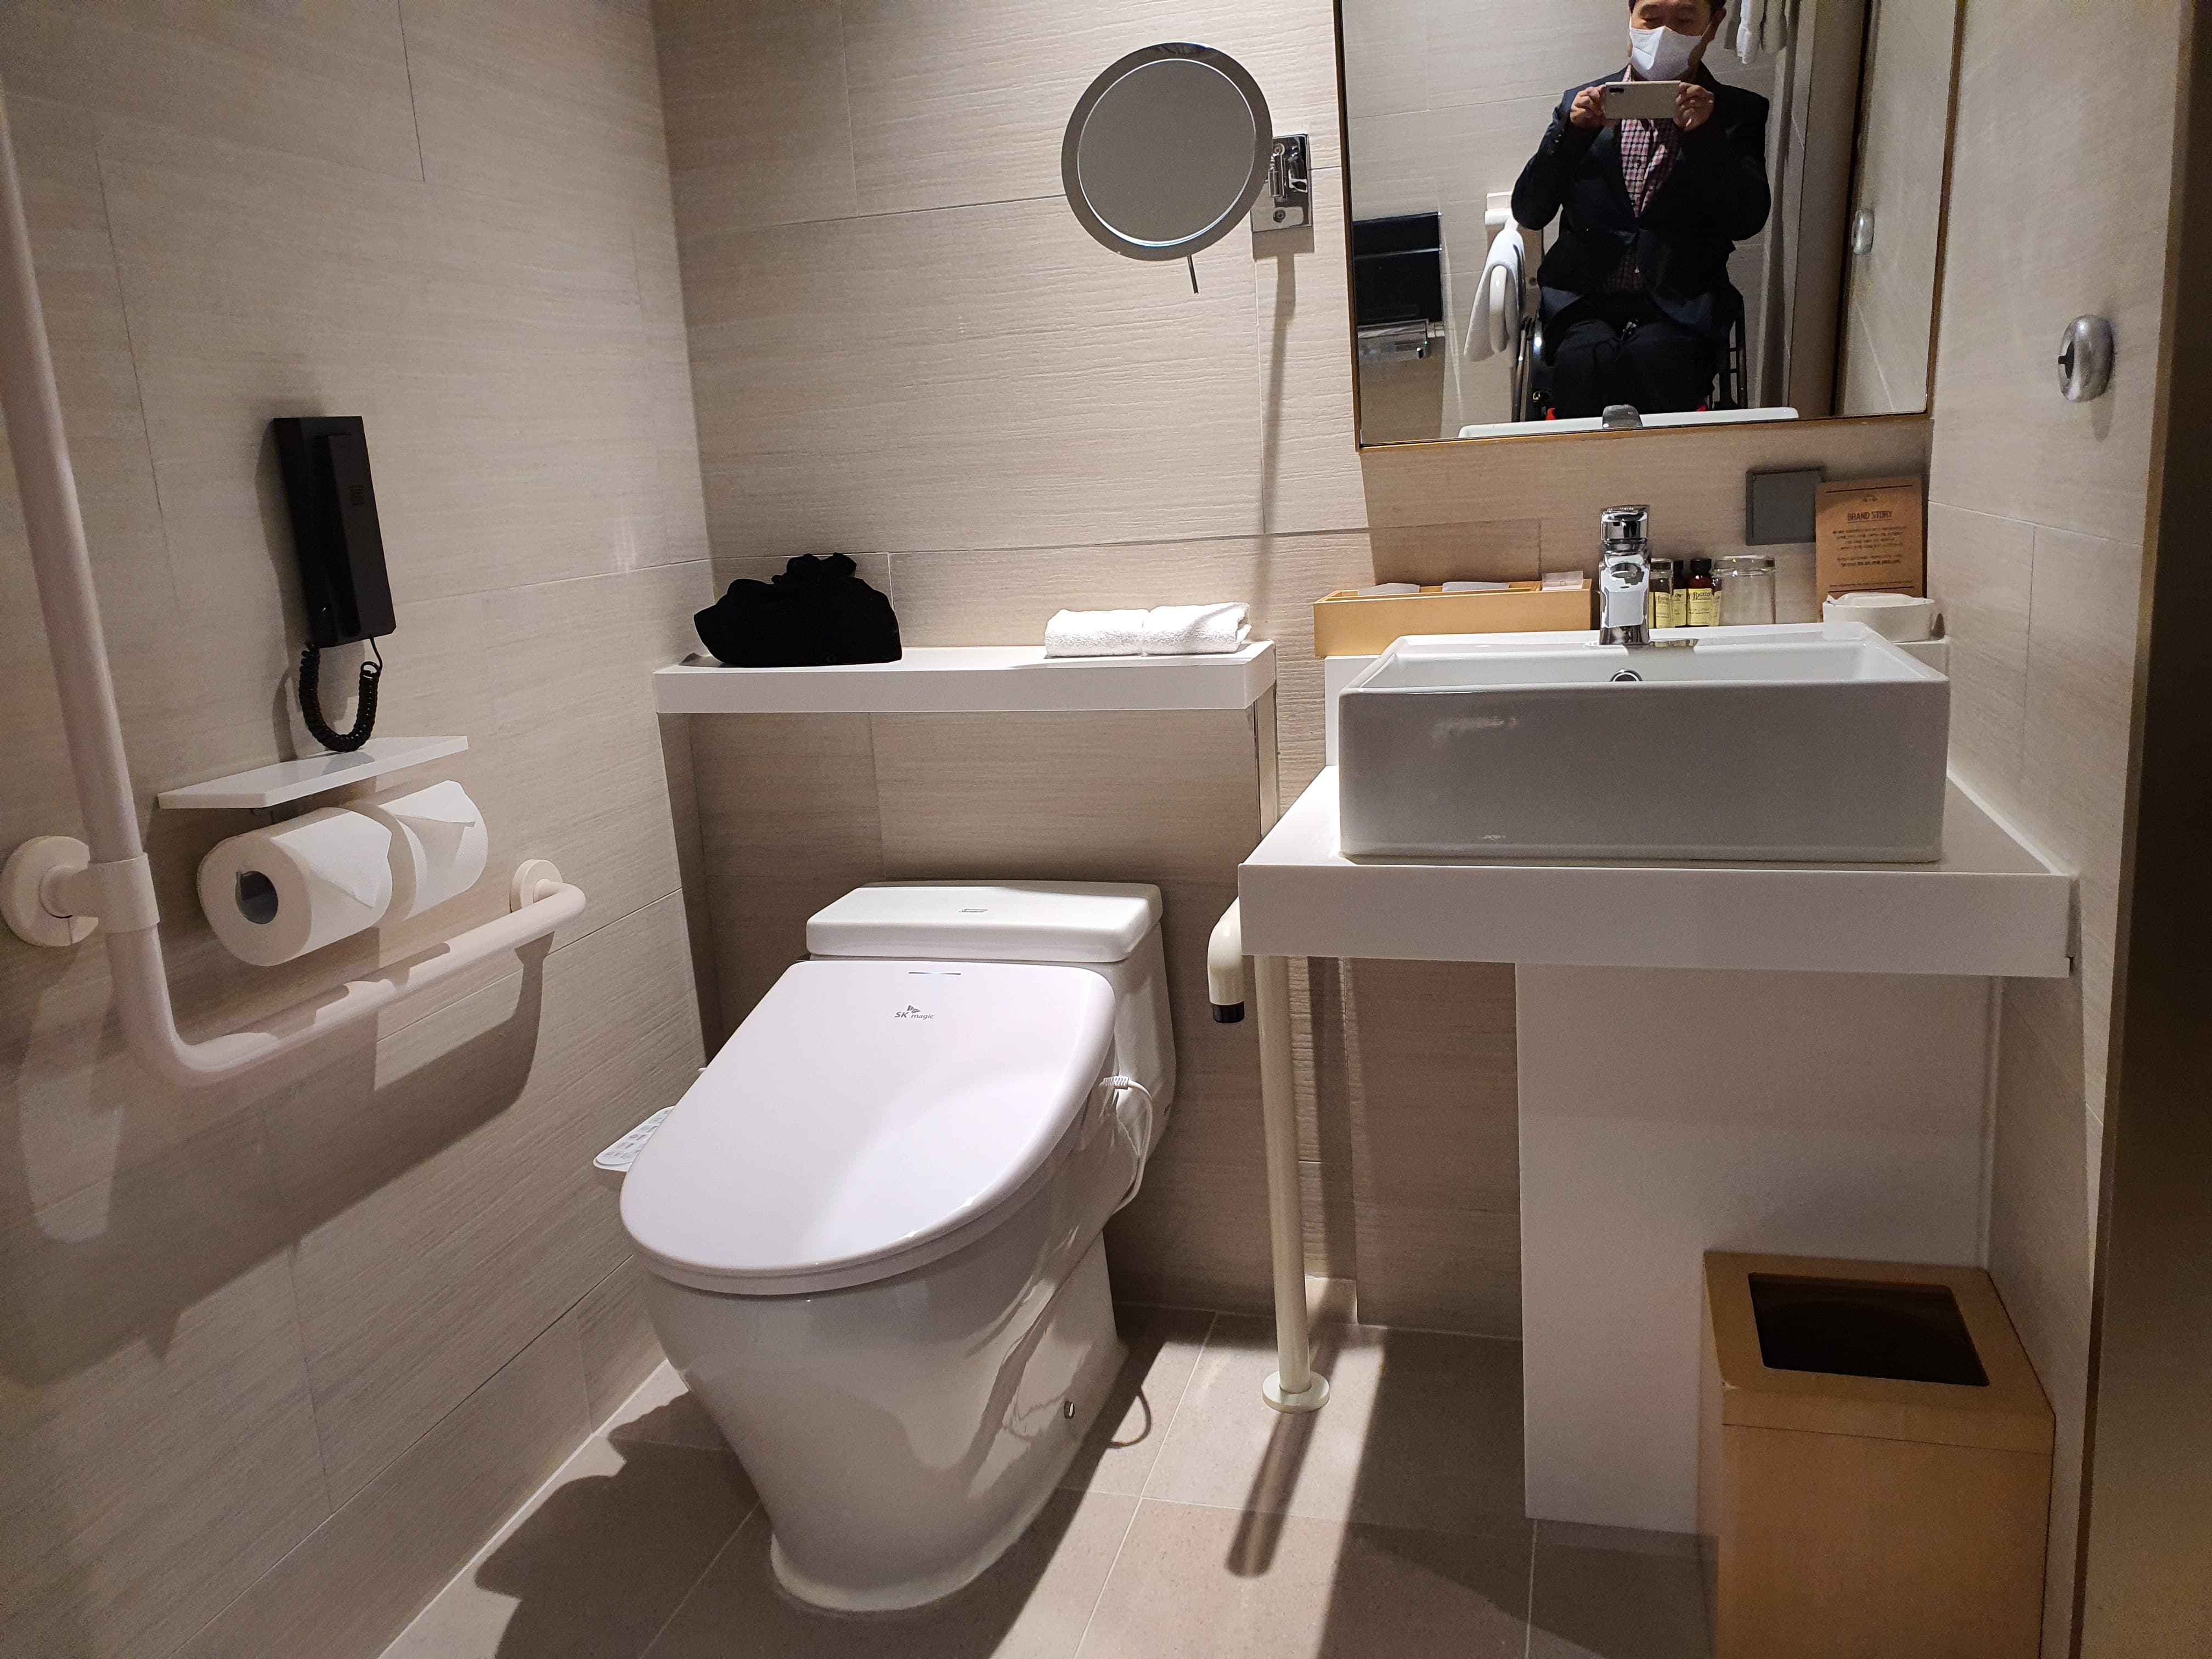 Bathroom0 : Interior view of the accessible restroom